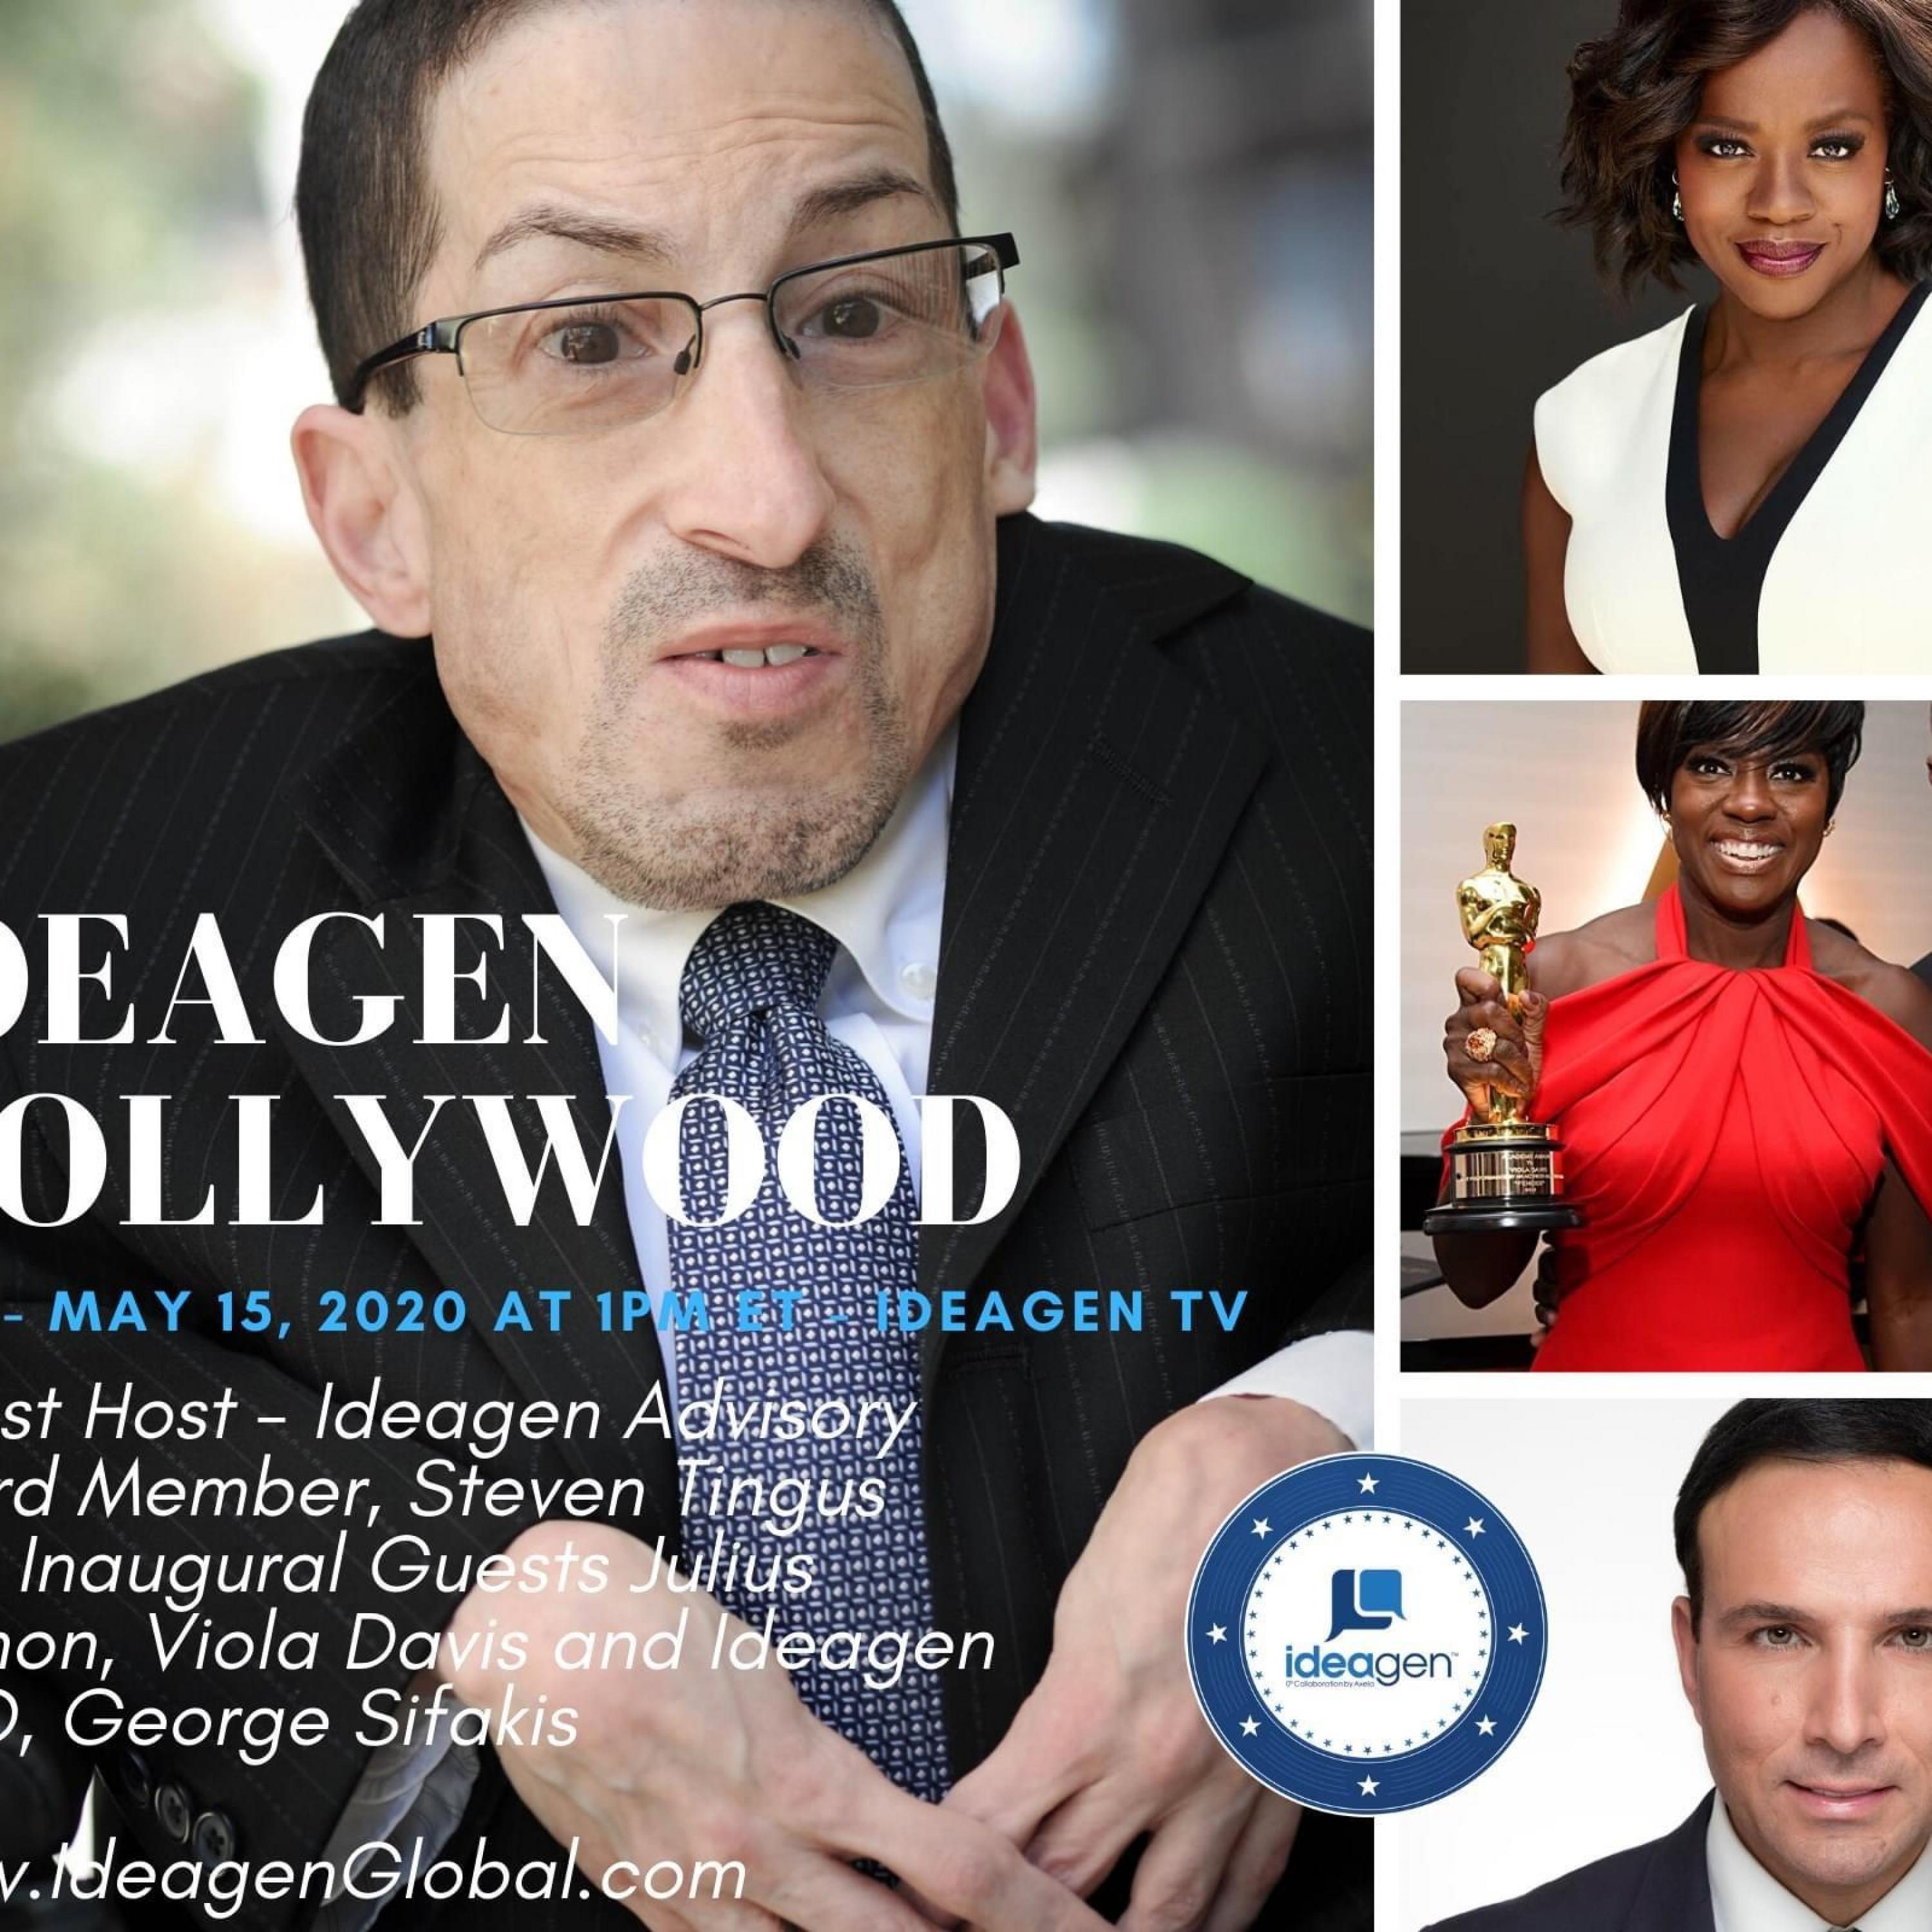 Ideagen TV - Hollywood hosted by Steven James Tingus